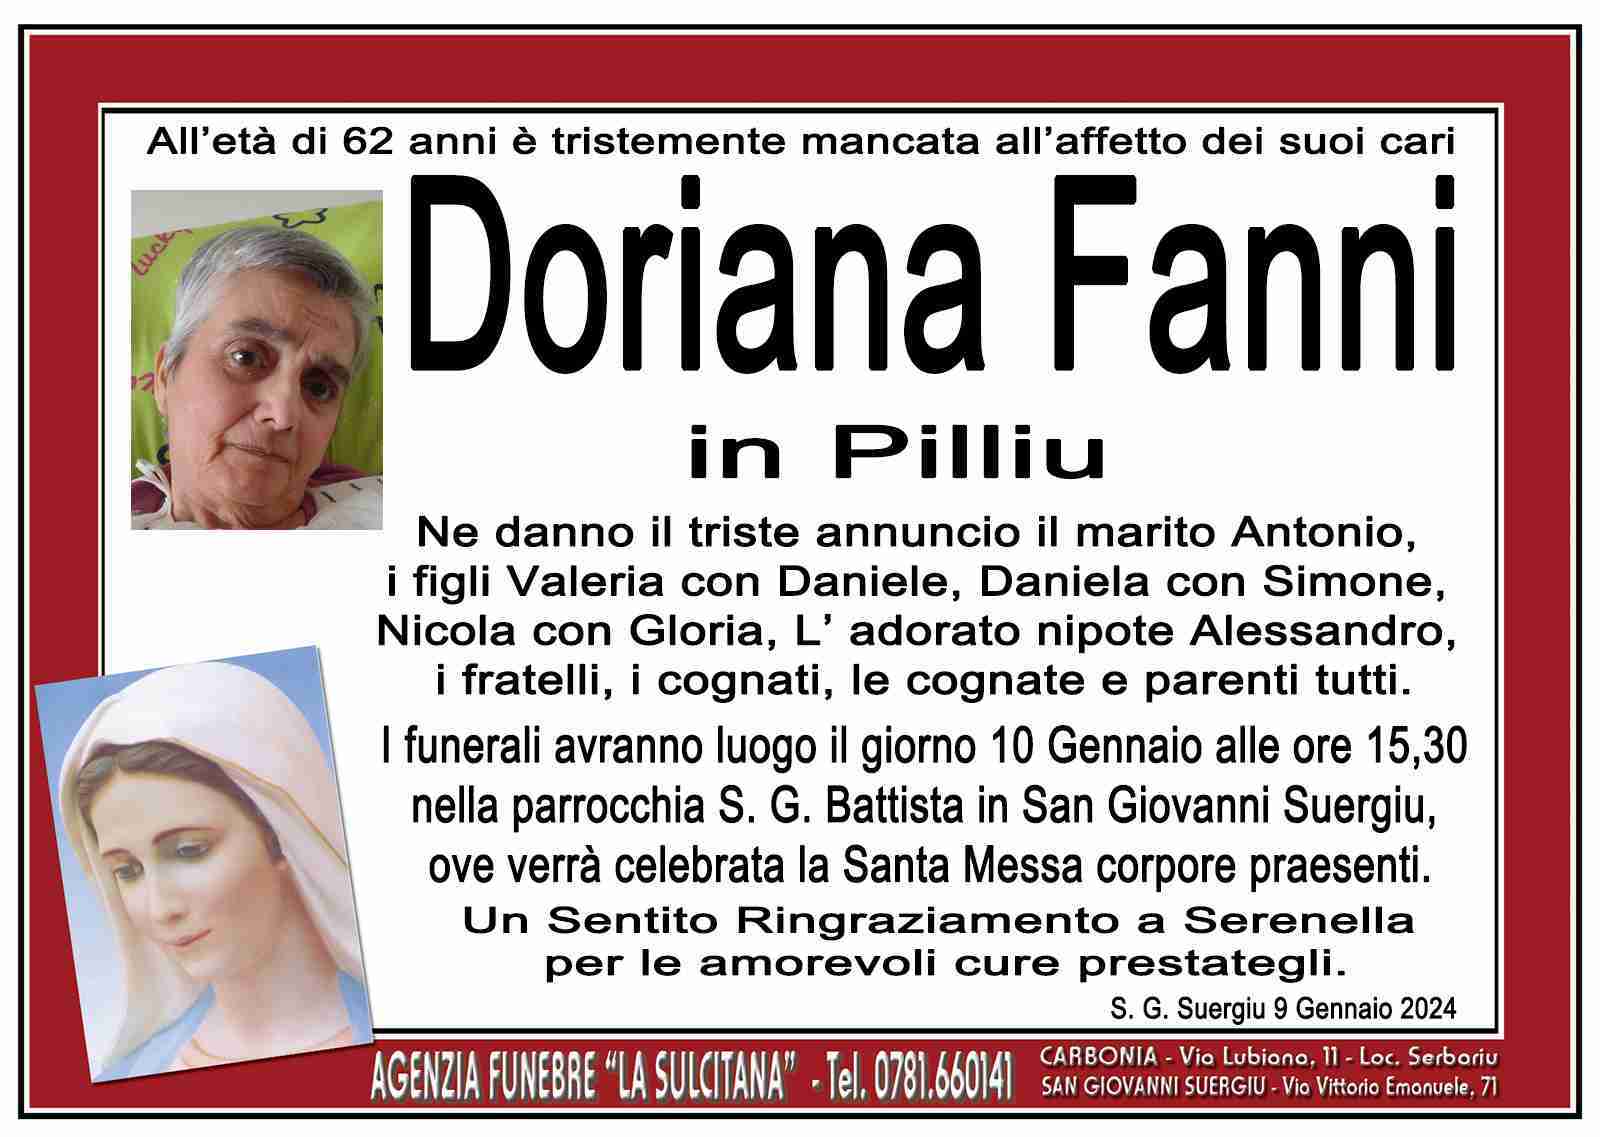 Doriana Fanni